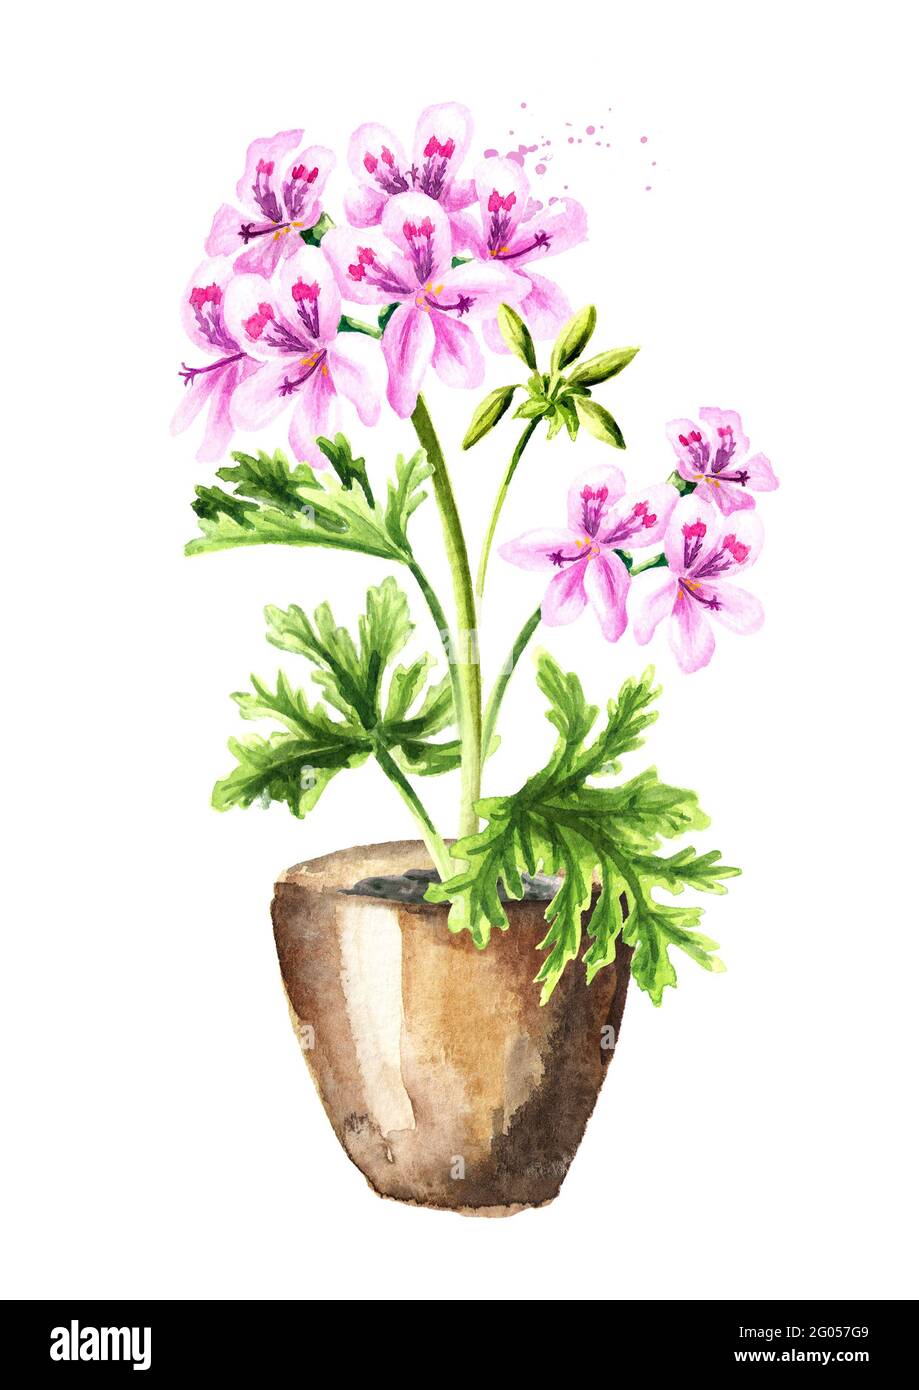 Pelargonium graveolens or Pelargonium x asperum, geranium plant in the flower pot. Watercolor hand drawn illustration, isolated on white background Stock Photo